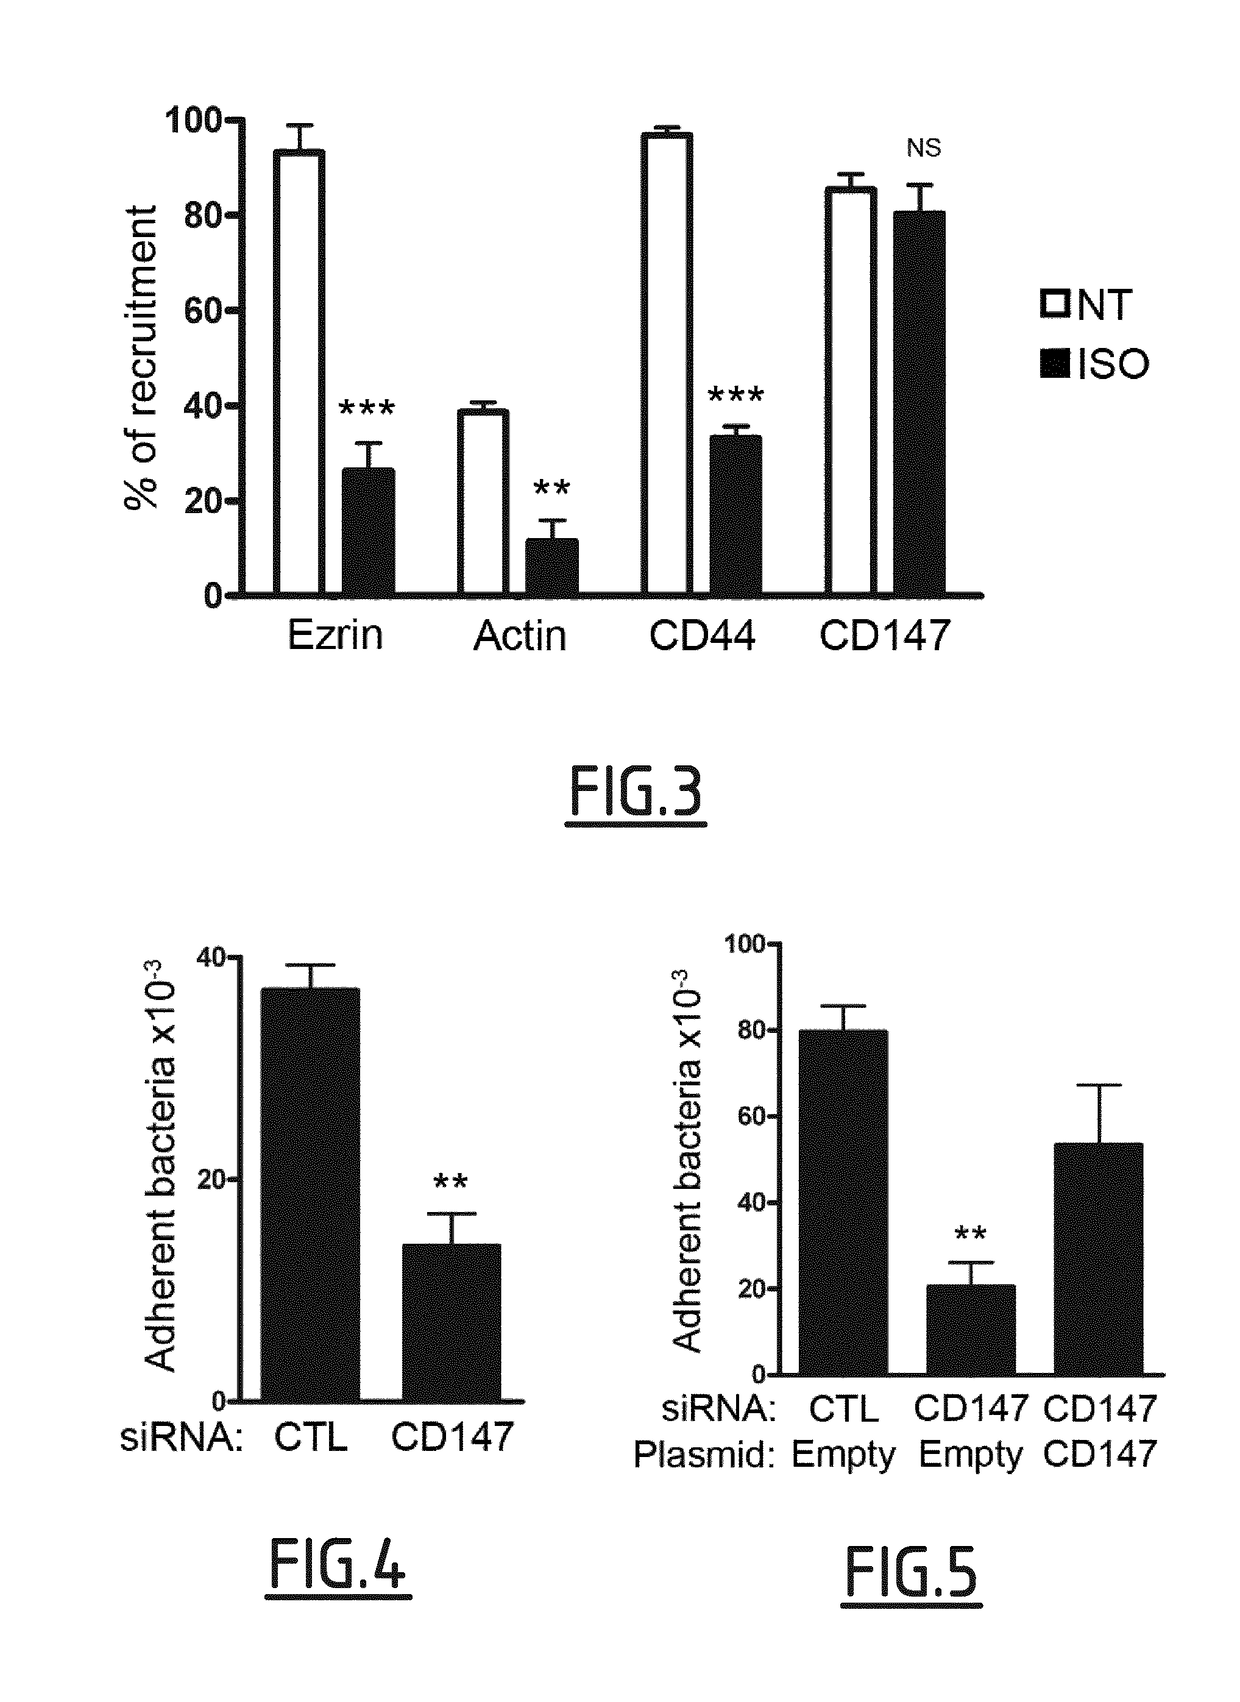 CD147 as receptor for pilus-mediated adhesion of <i>Meningococci </i>to vascular endothelia